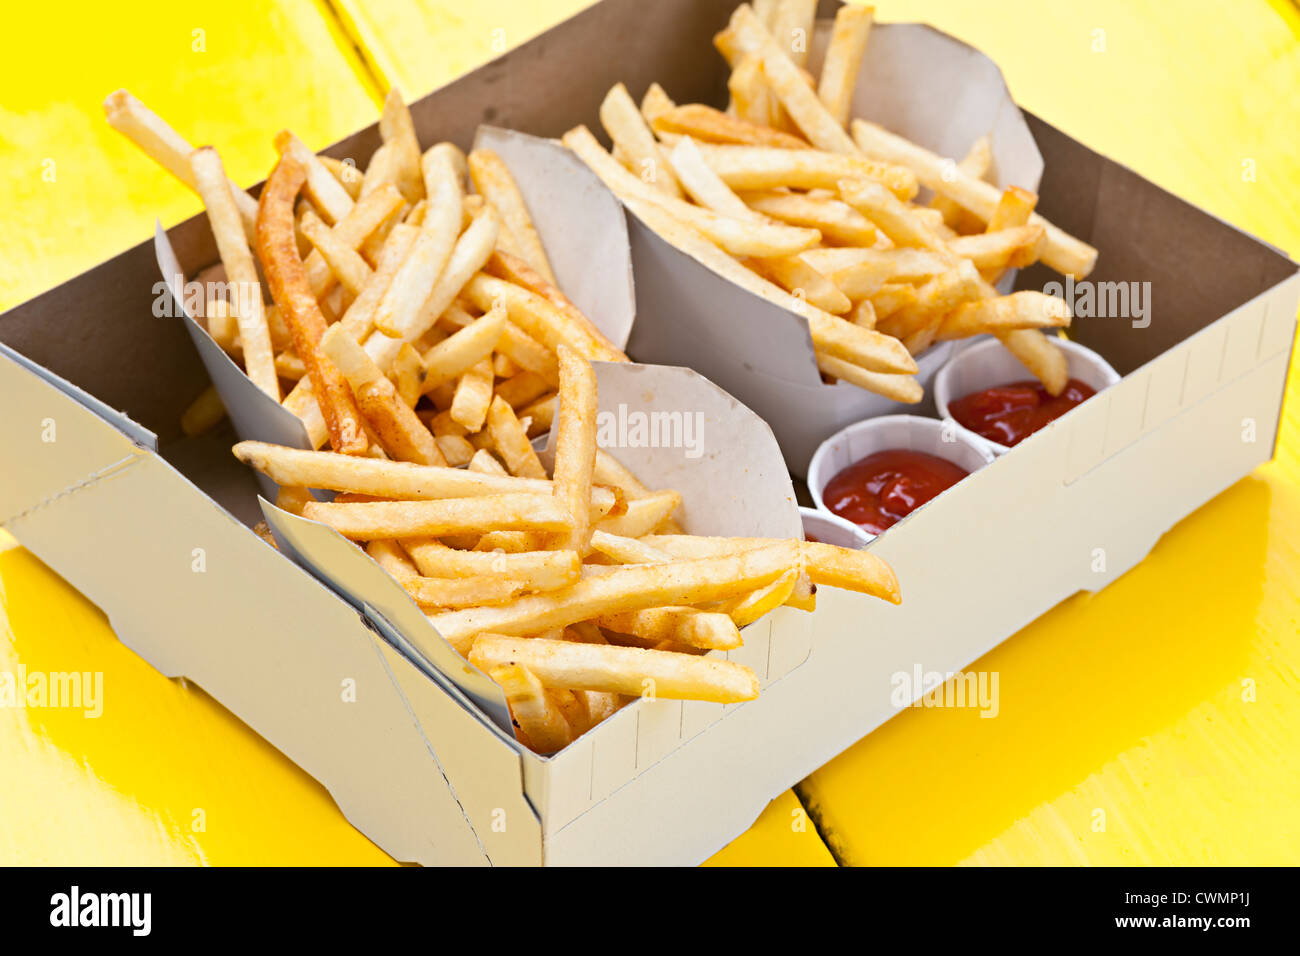 Des portions de frites avec du ketchup à emporter en carton fort Banque D'Images